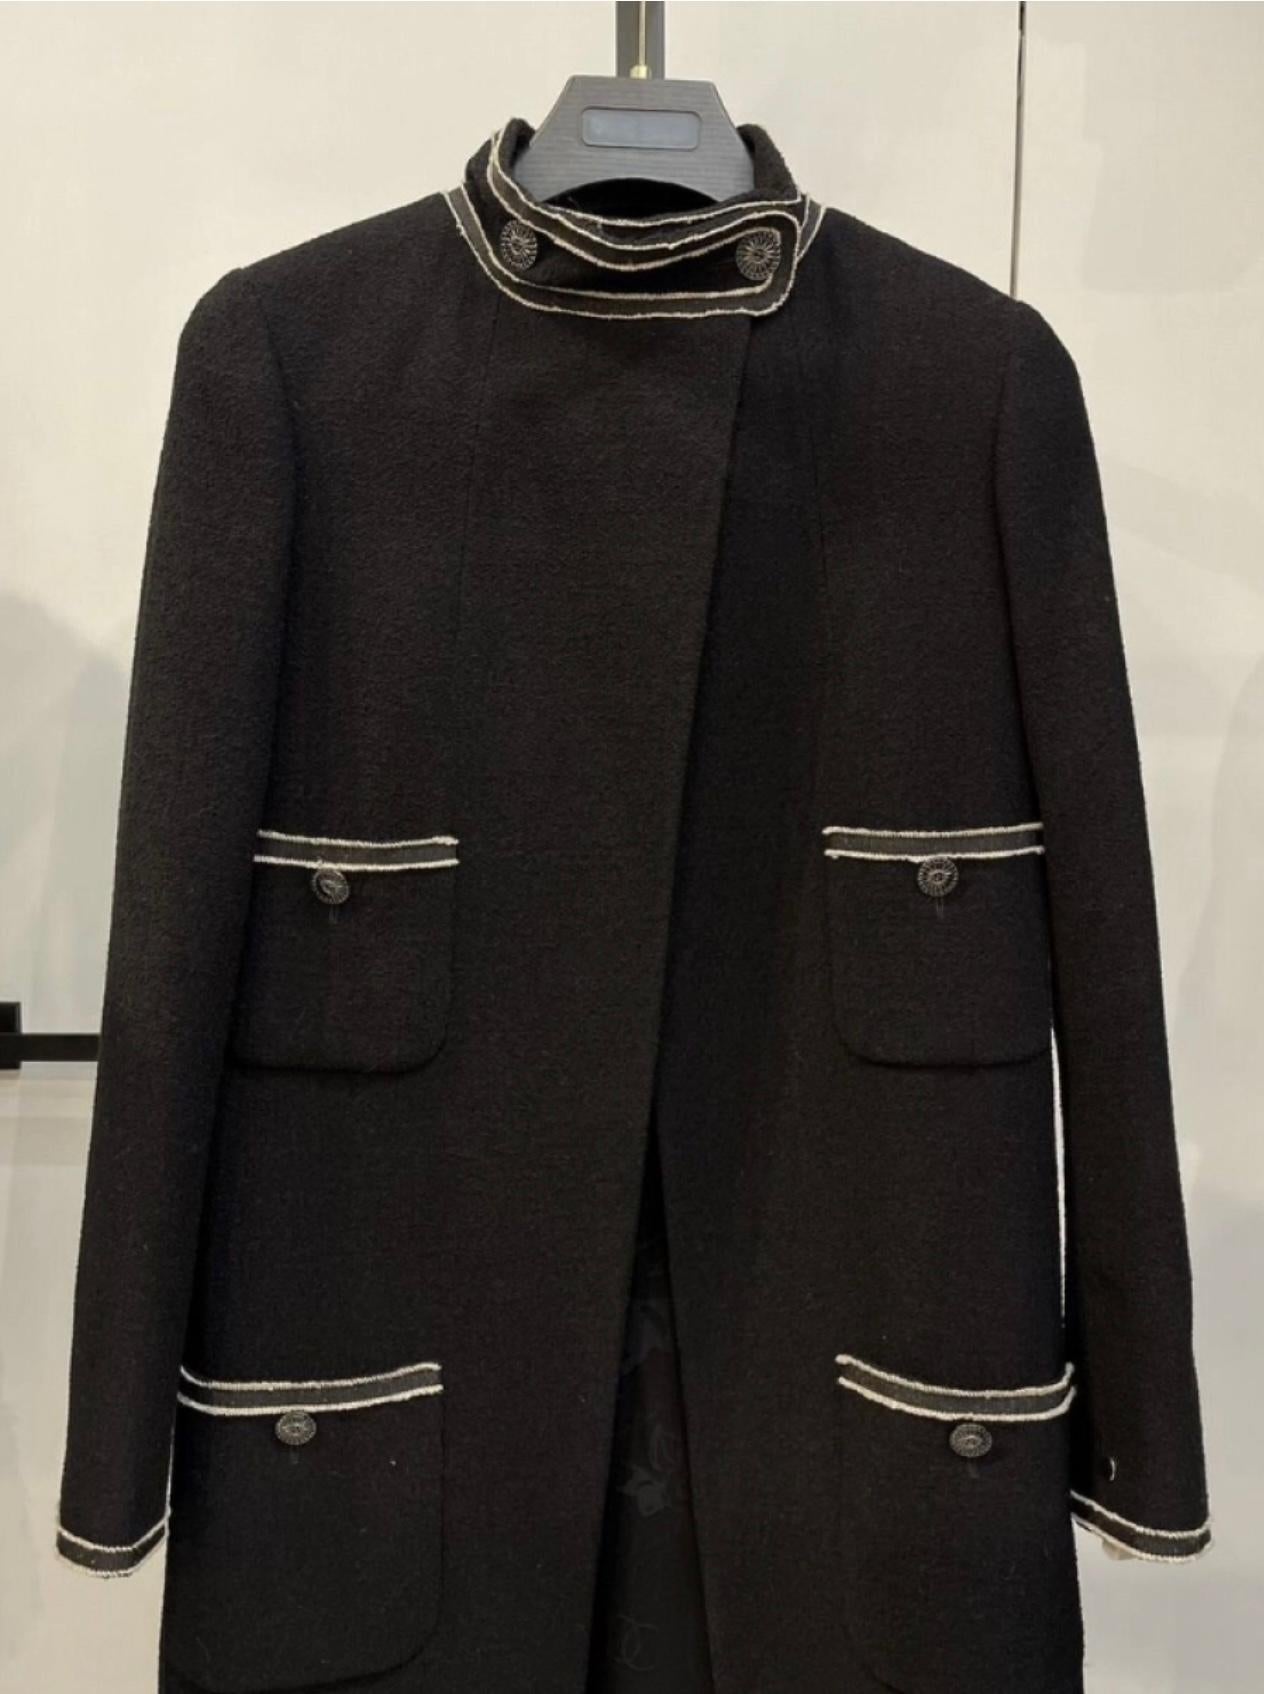 Chanel CC Buttons Paris / Singapore Runway Black Tweed Coat 7